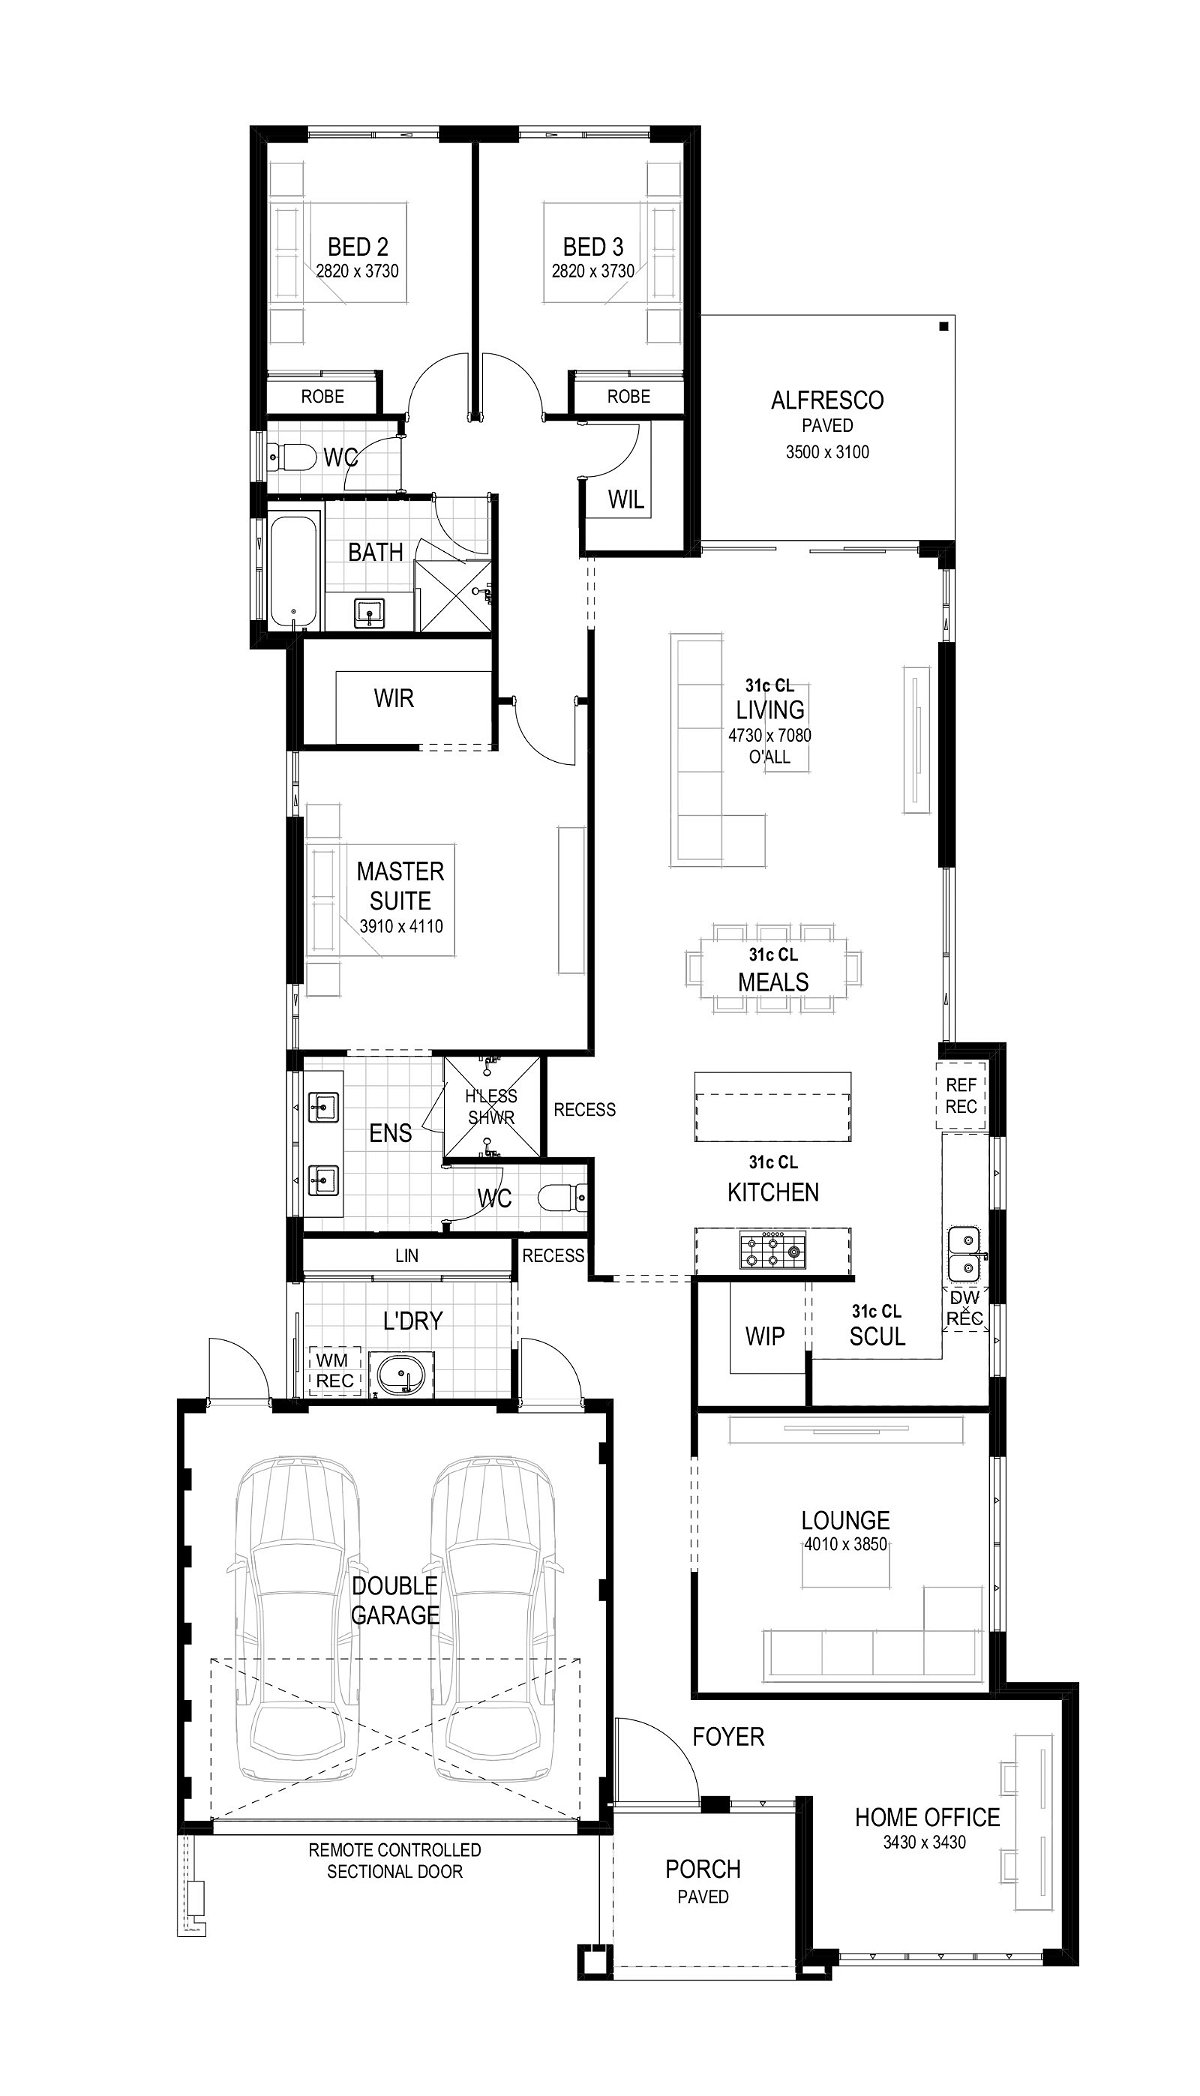 Plunkett Homes - Avenue | Contemporary - Floorplan - 202403 Plk The Avenue Floorplan Contemporary Luxe